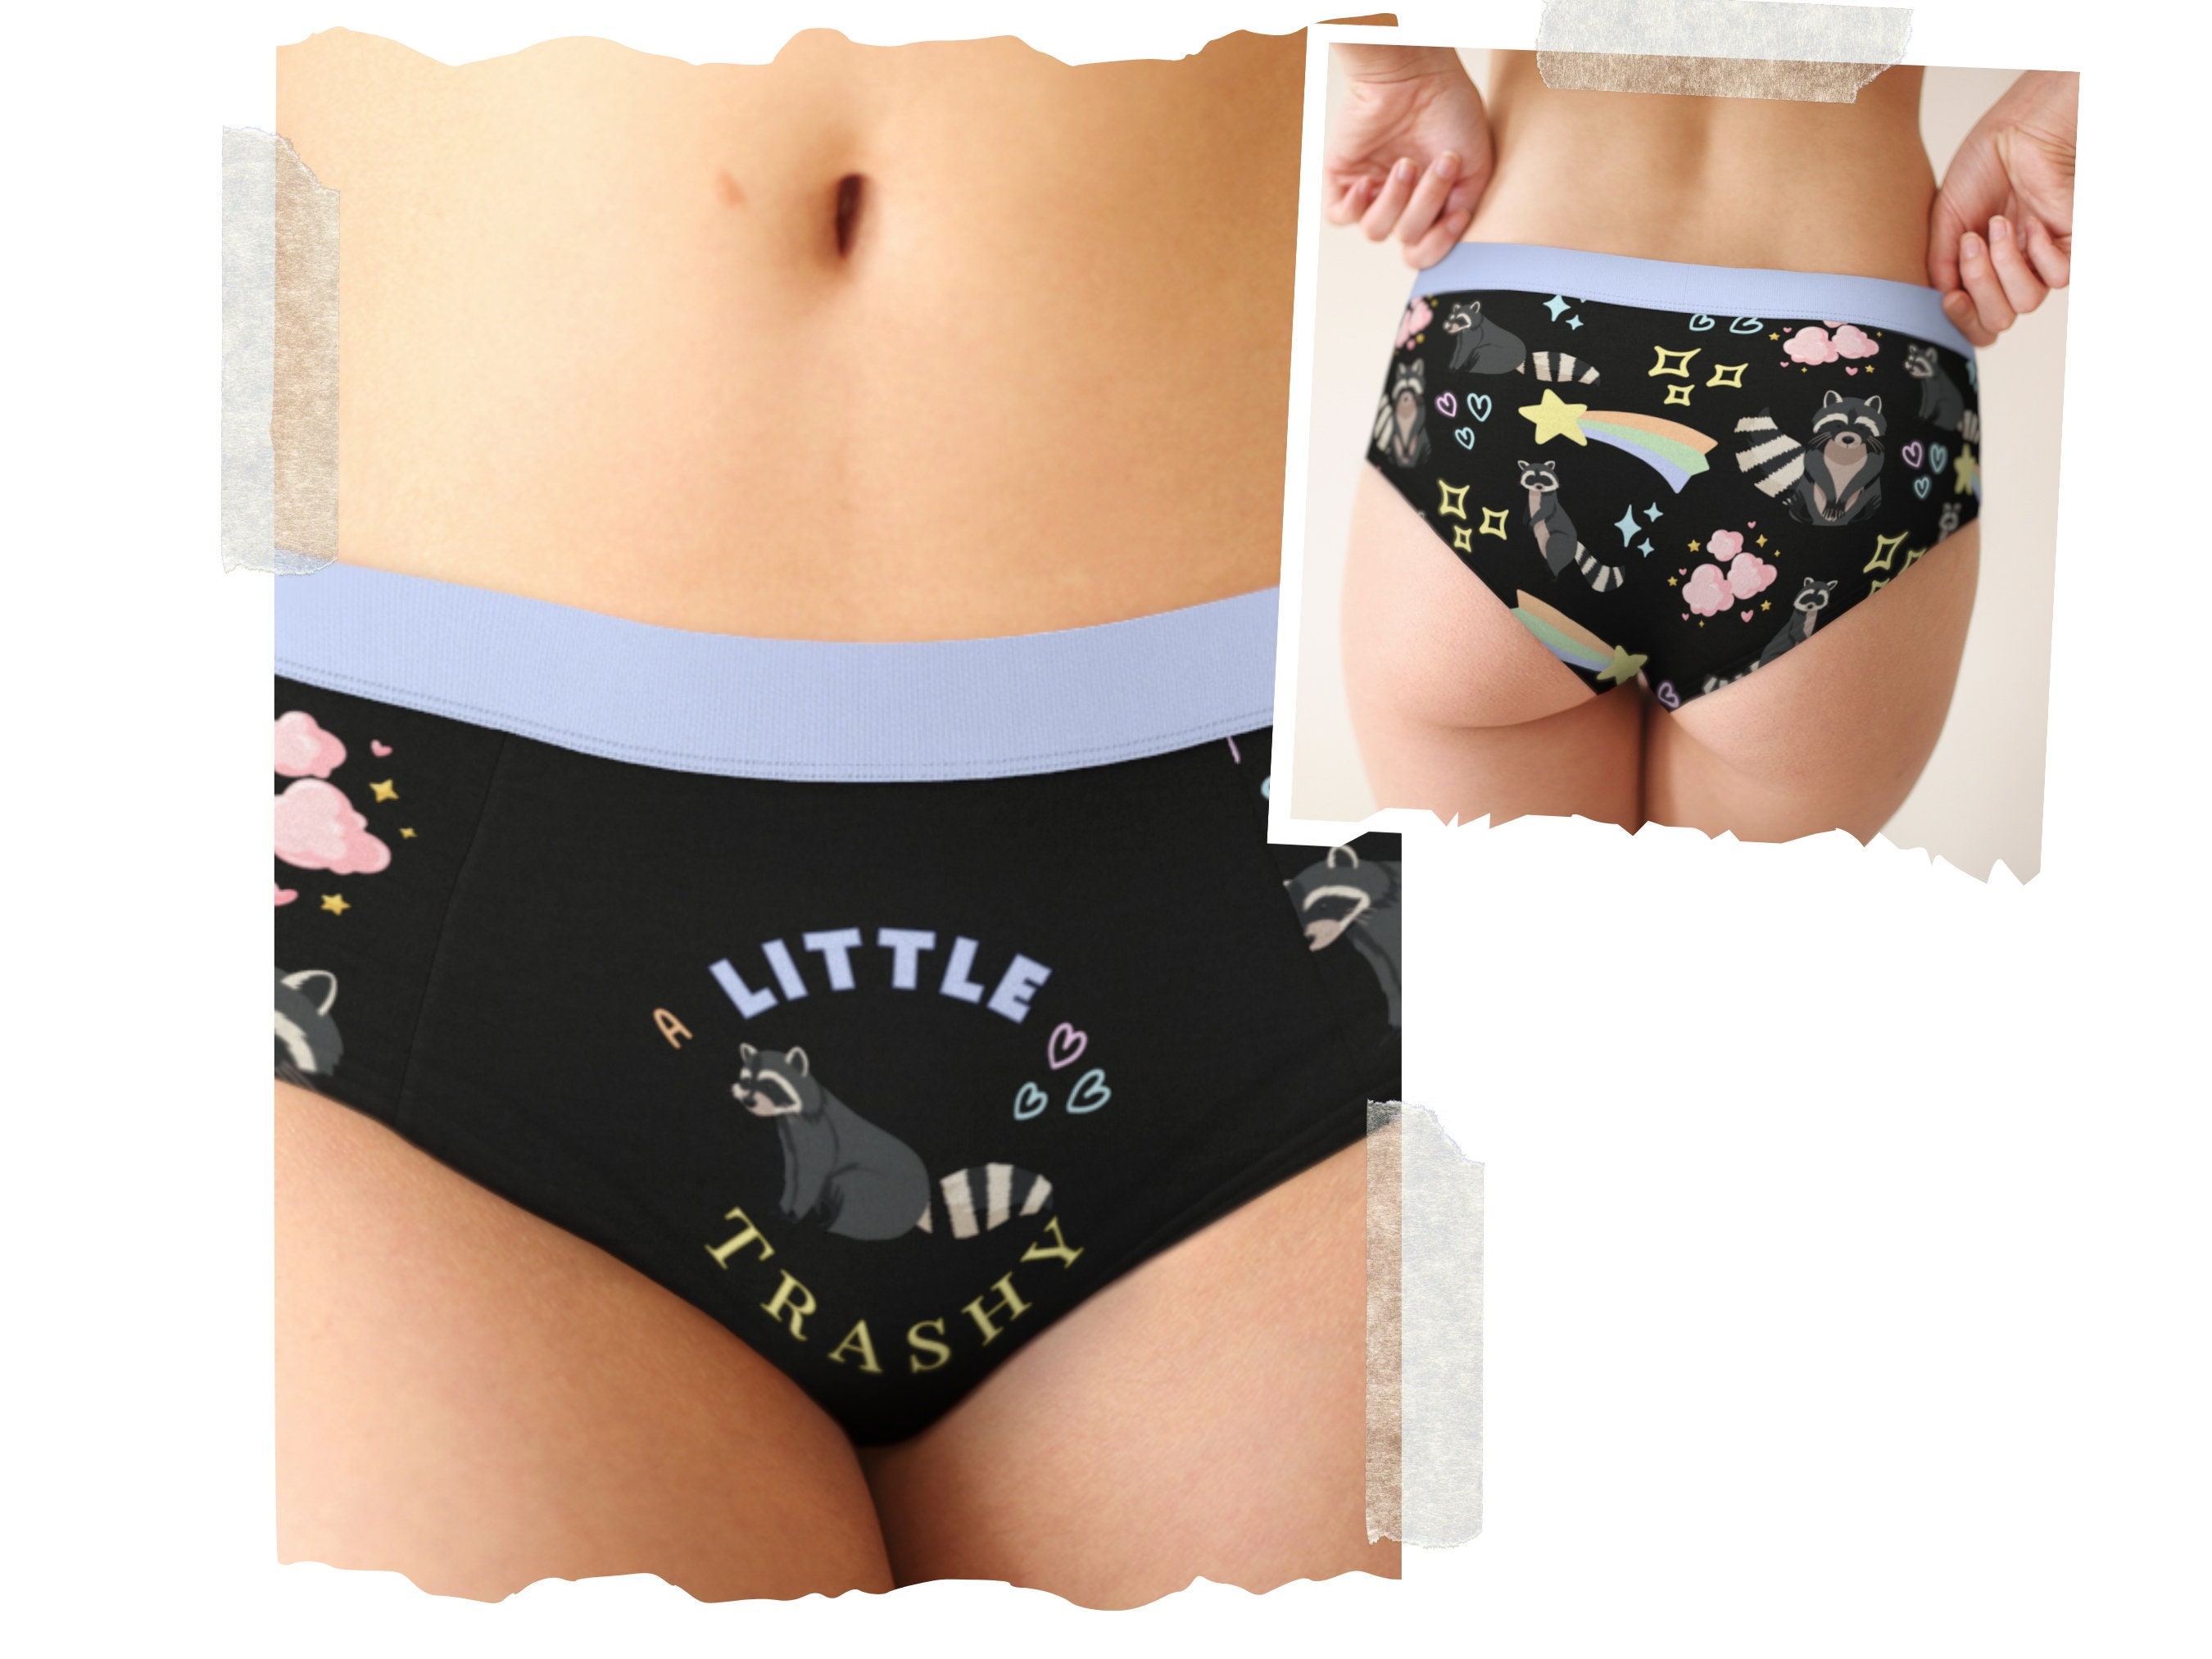 Raccoon and Cherry Women's Thongs Sexy T Back G-Strings Panties Underwear  Panty 